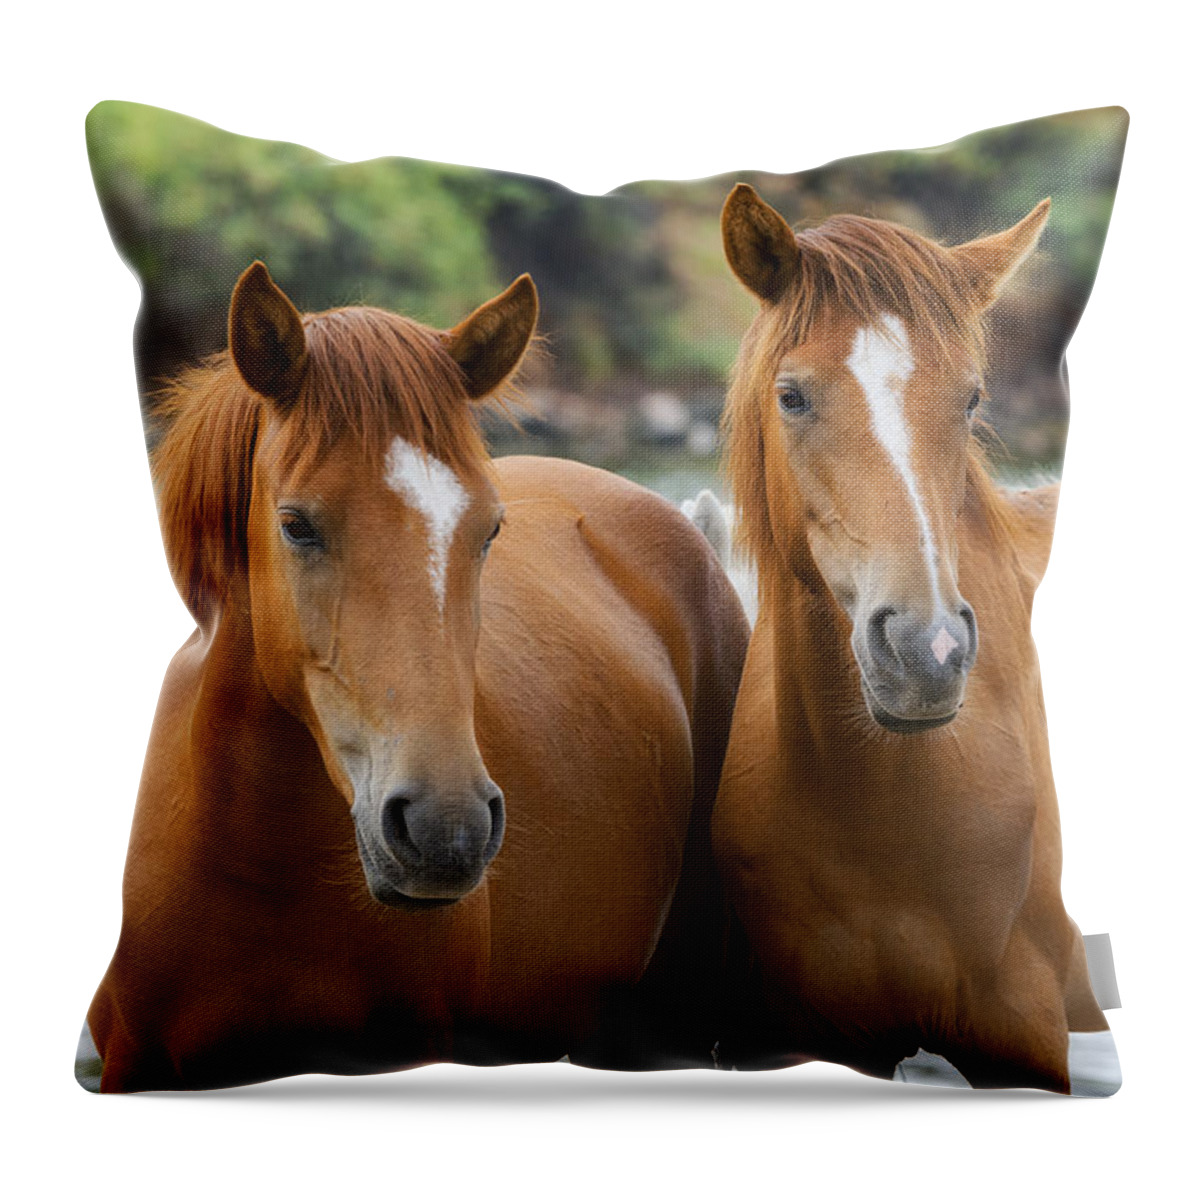 Wild Horses Throw Pillow featuring the photograph A Family Resemblance by Saija Lehtonen